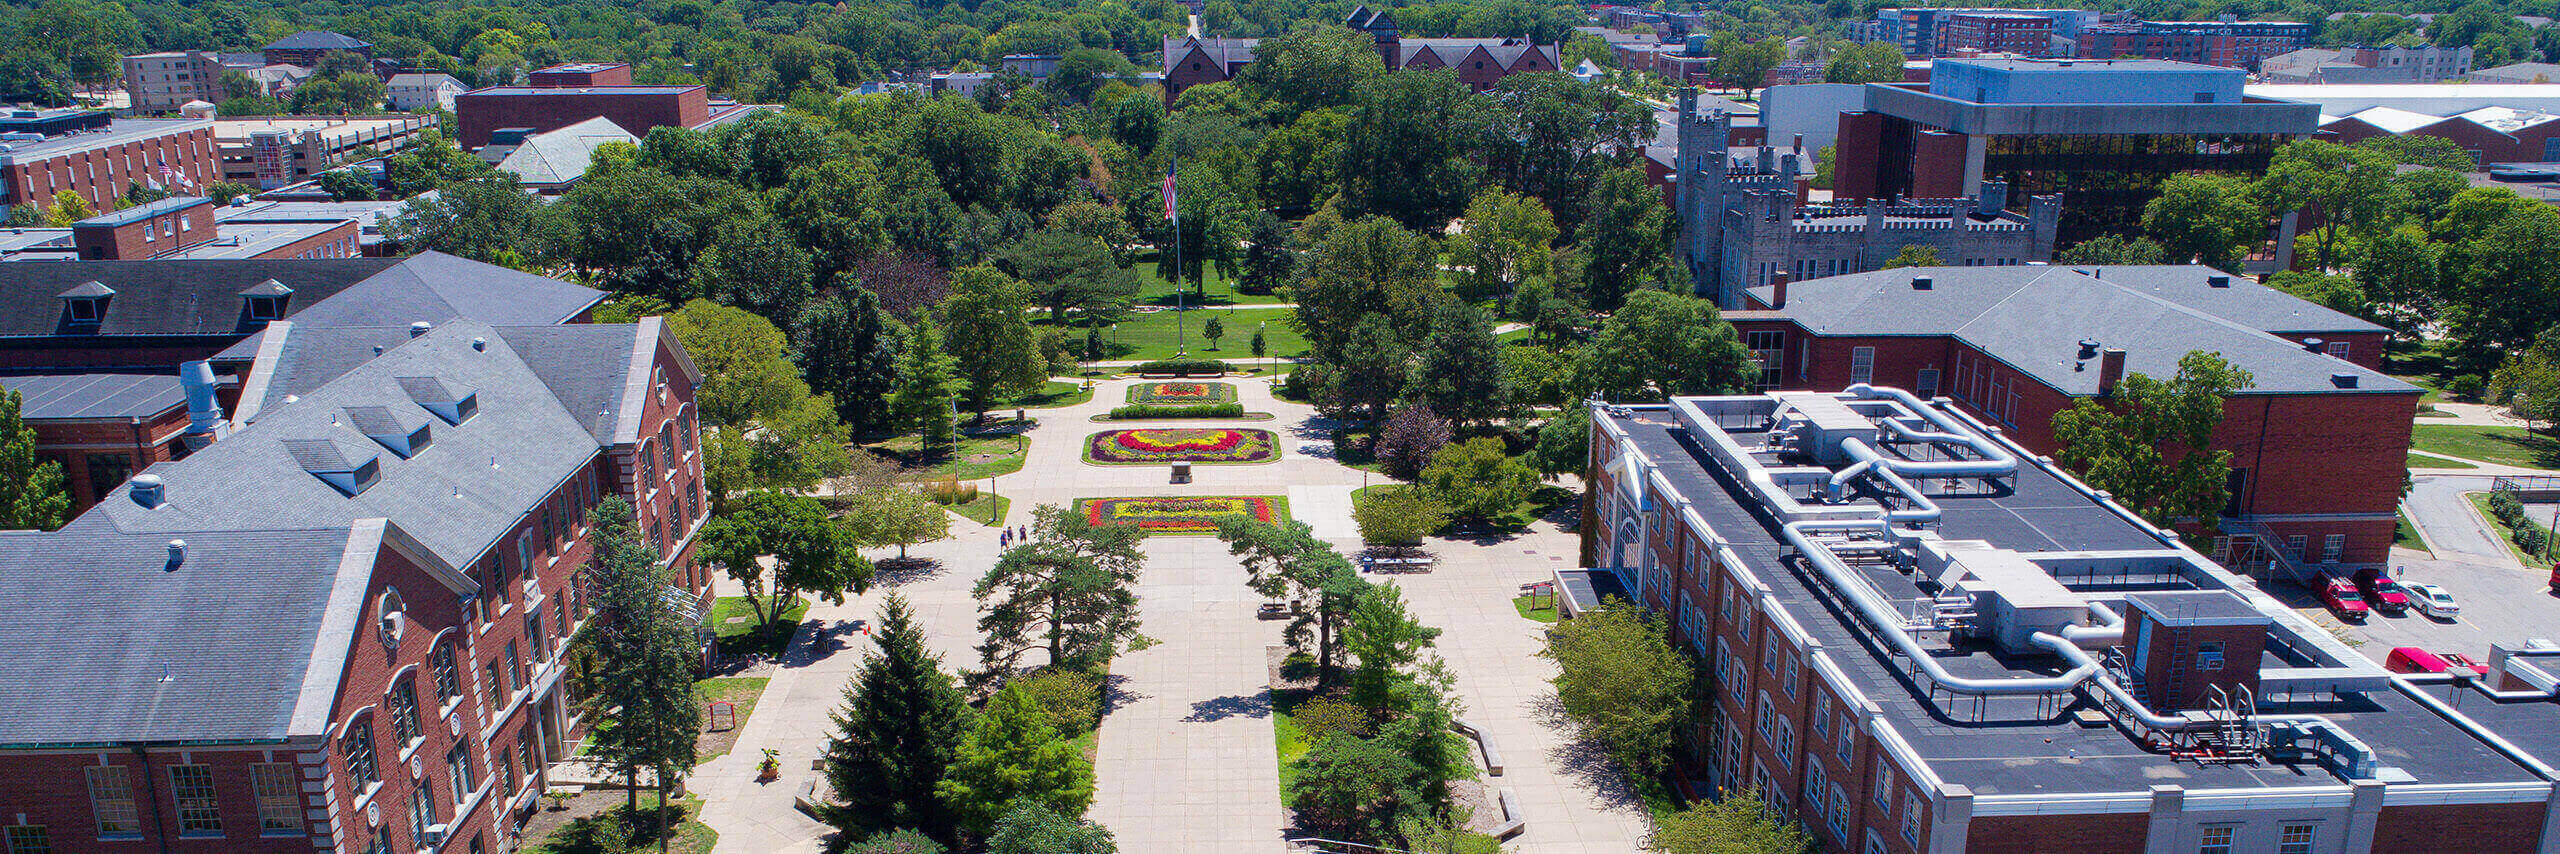 Aerial image of Illinois State University campus